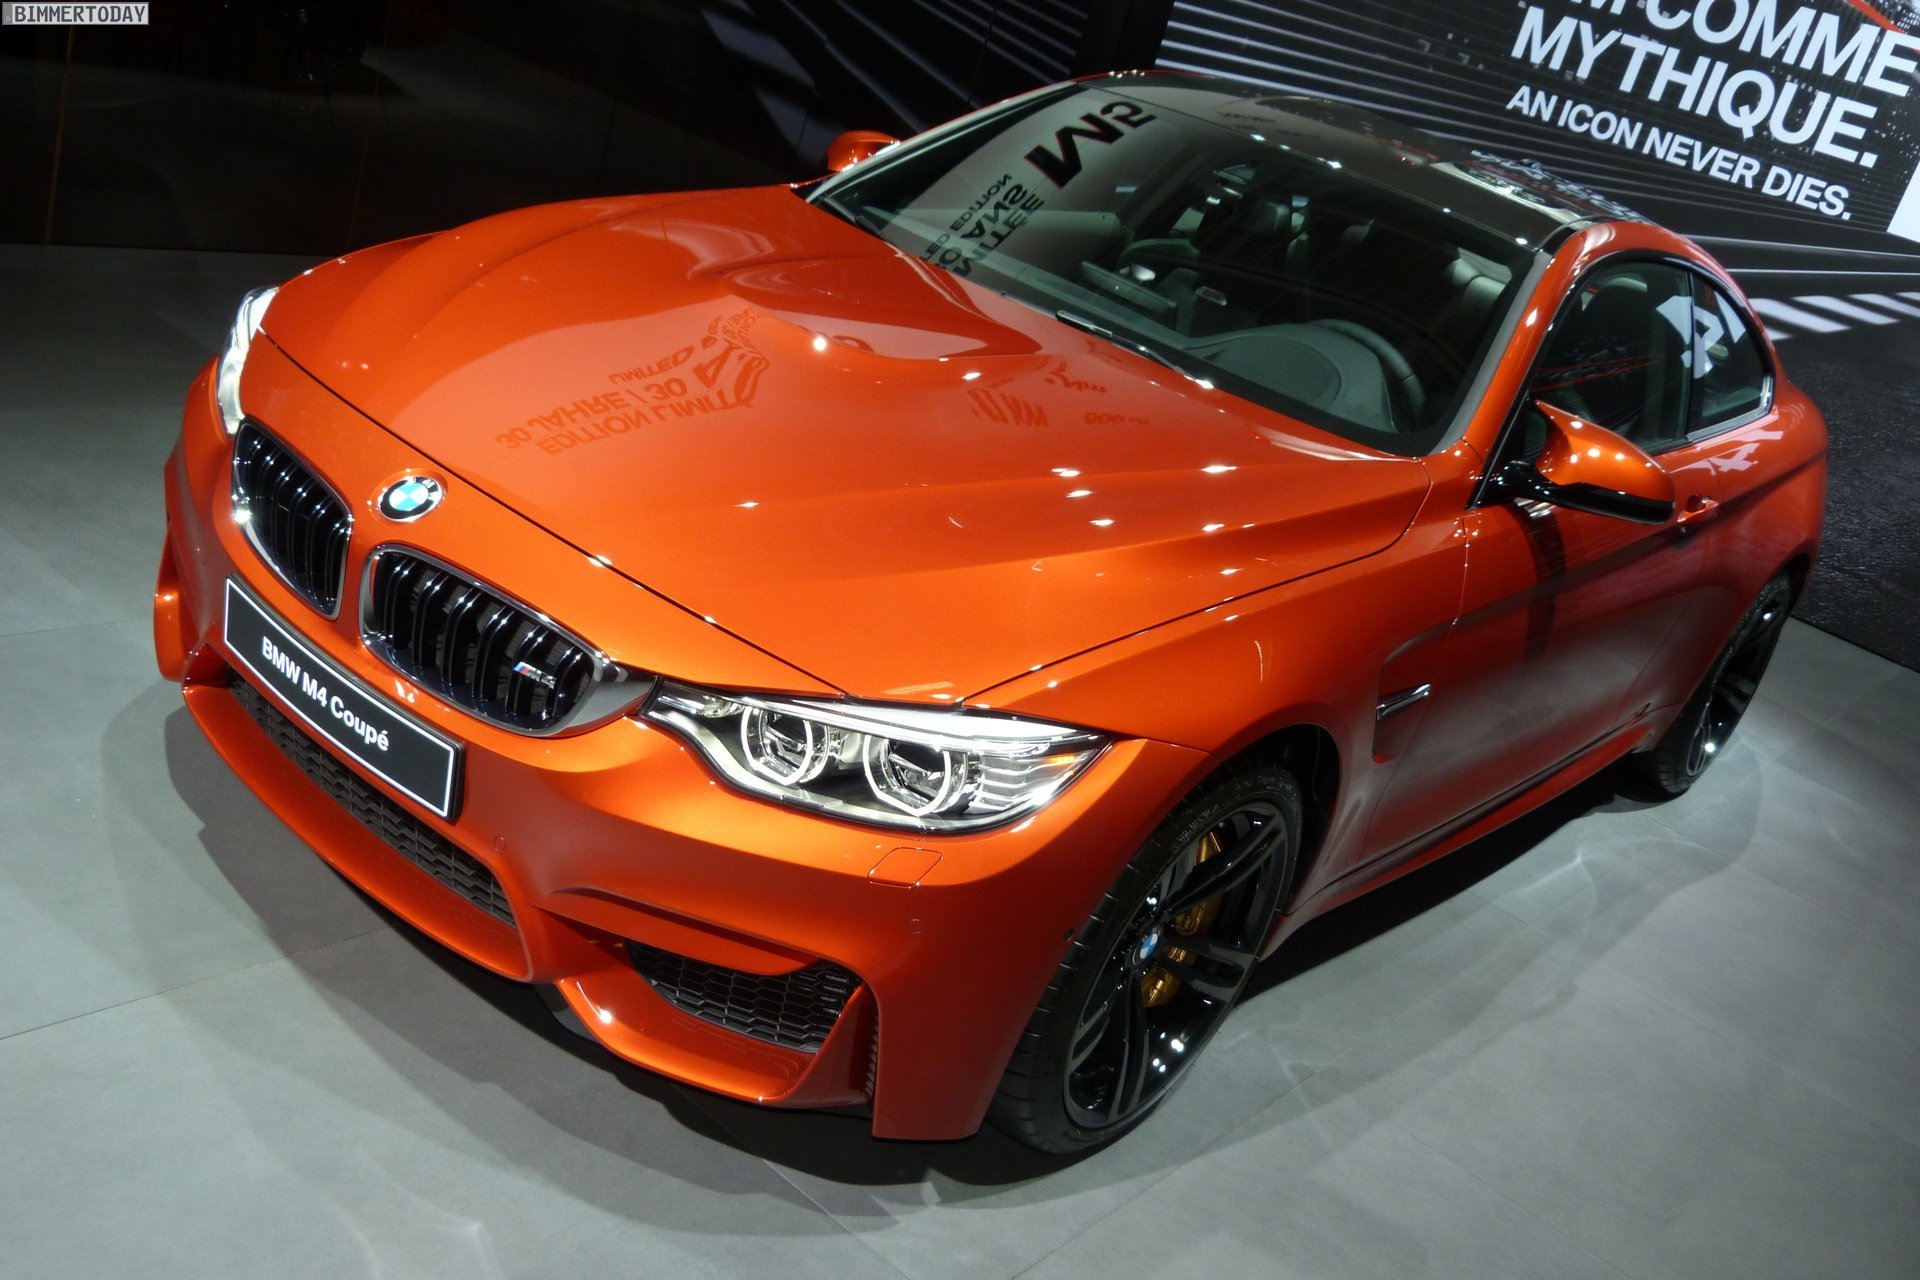 2014-BMW-M4-Coupe-F82-Sakhir-Orange-Autosalon-Paris-LIVE-01.jpg.84db49e2c5affe12f53ad8ac5b2d4da7.jpg